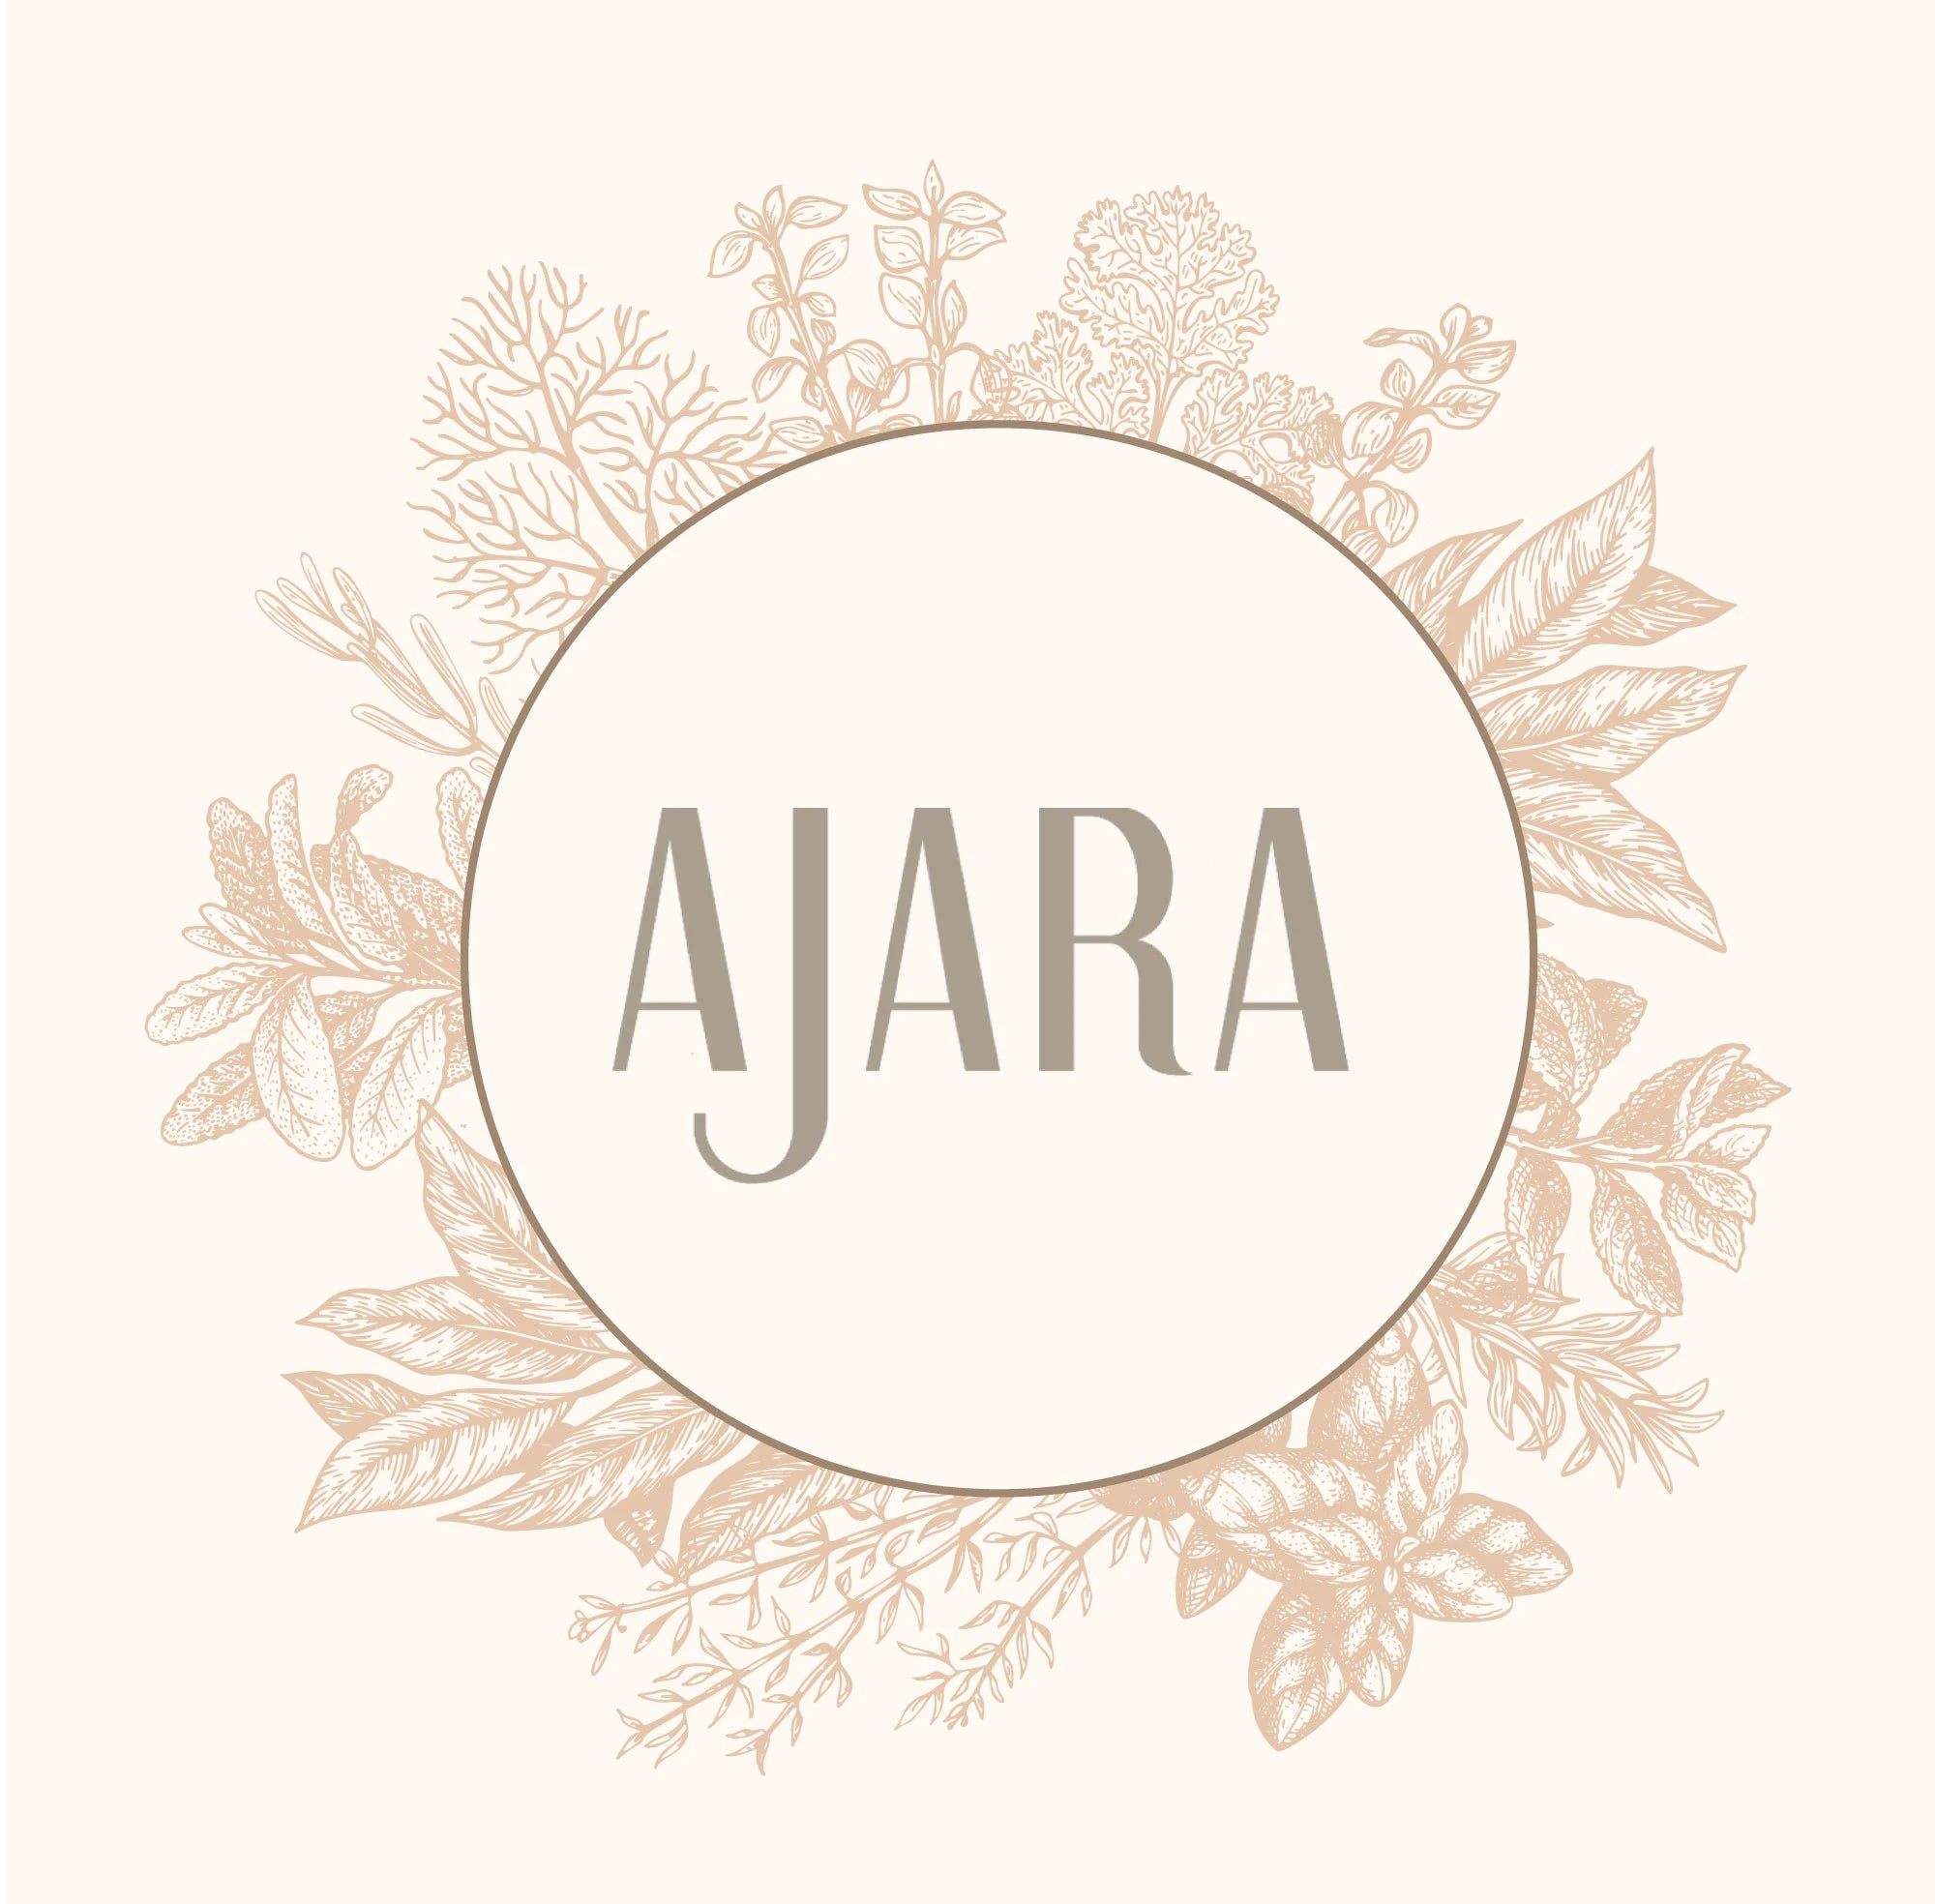 About Ajara